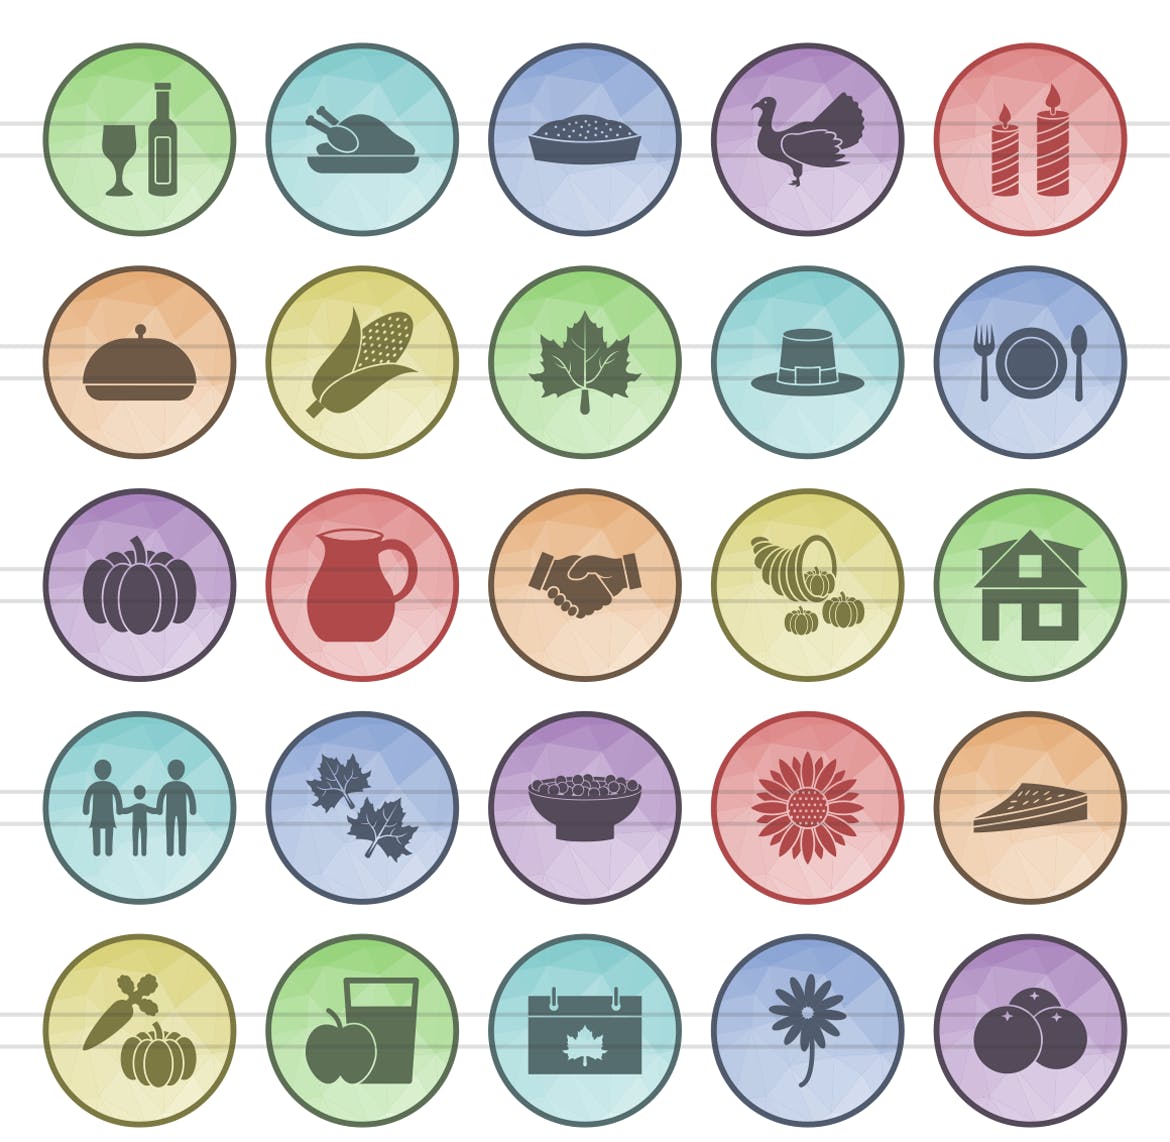 50枚感恩节主题圆形16设计素材网精选图标素材 50 Thanksgiving Filled Low Poly Icons插图(1)